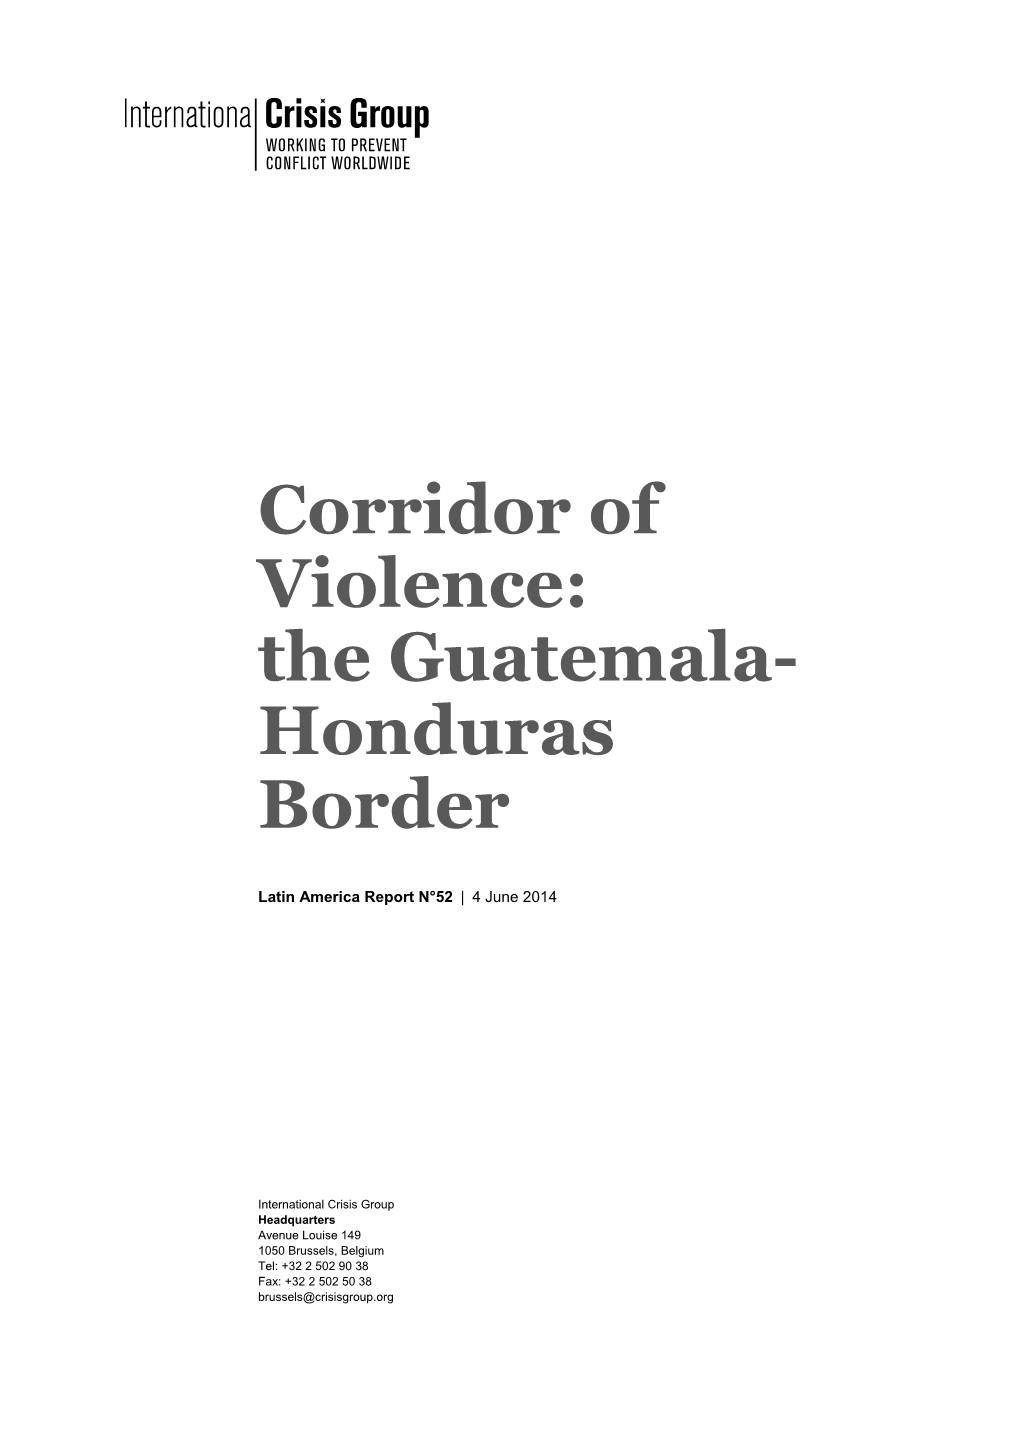 Corridor of Violence: the Guatemala-Honduras Border Crisis Group Latin America Report N°52, 4 June 2014 Page Ii